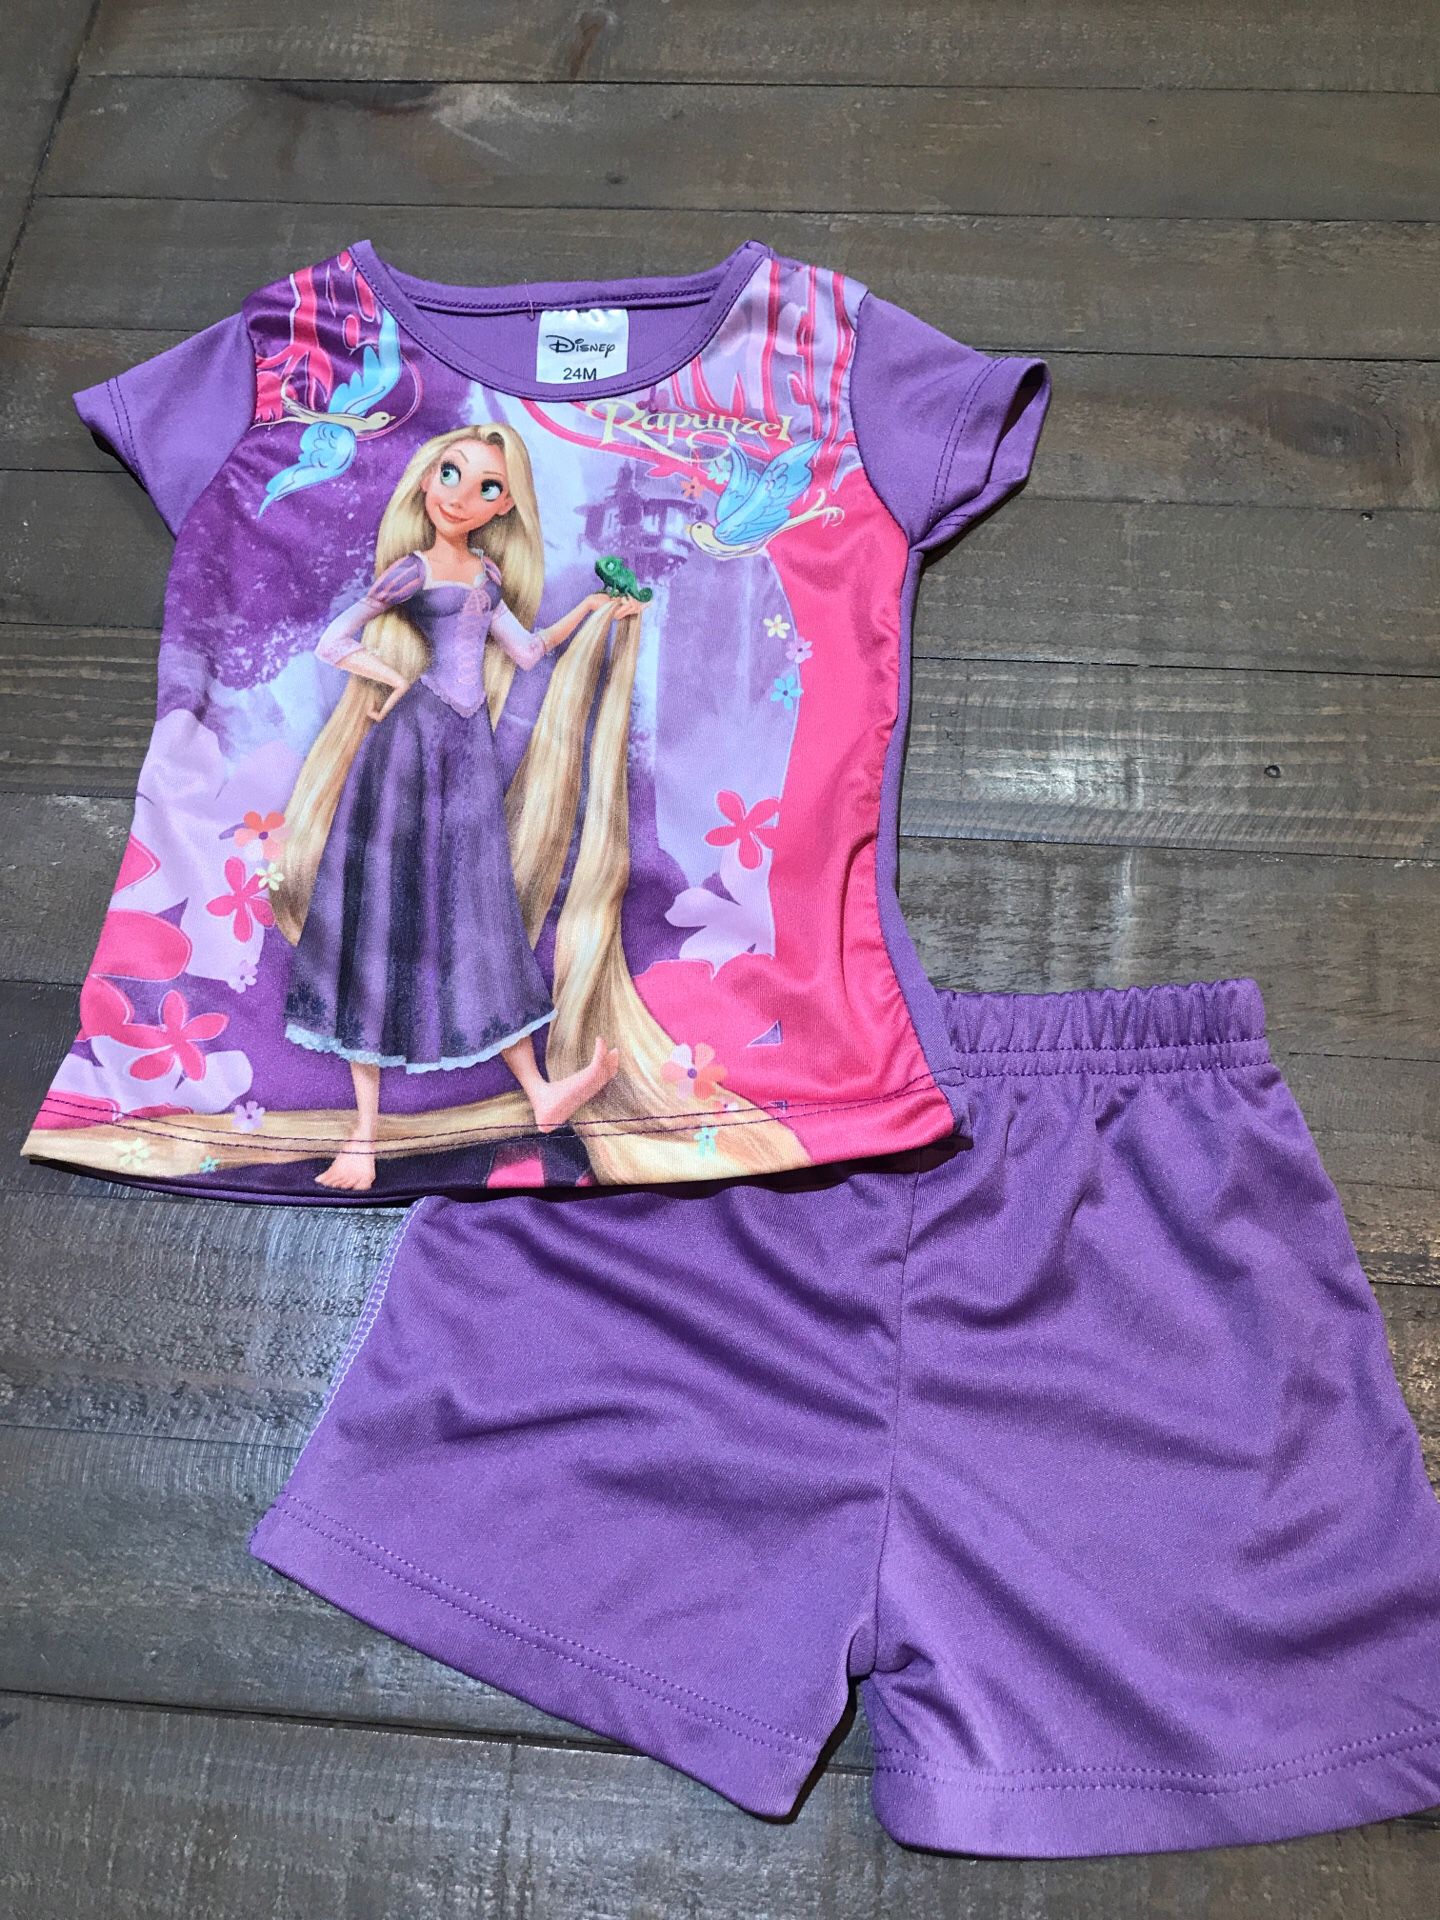 24m Disney Rapunzel pj set - $5!!